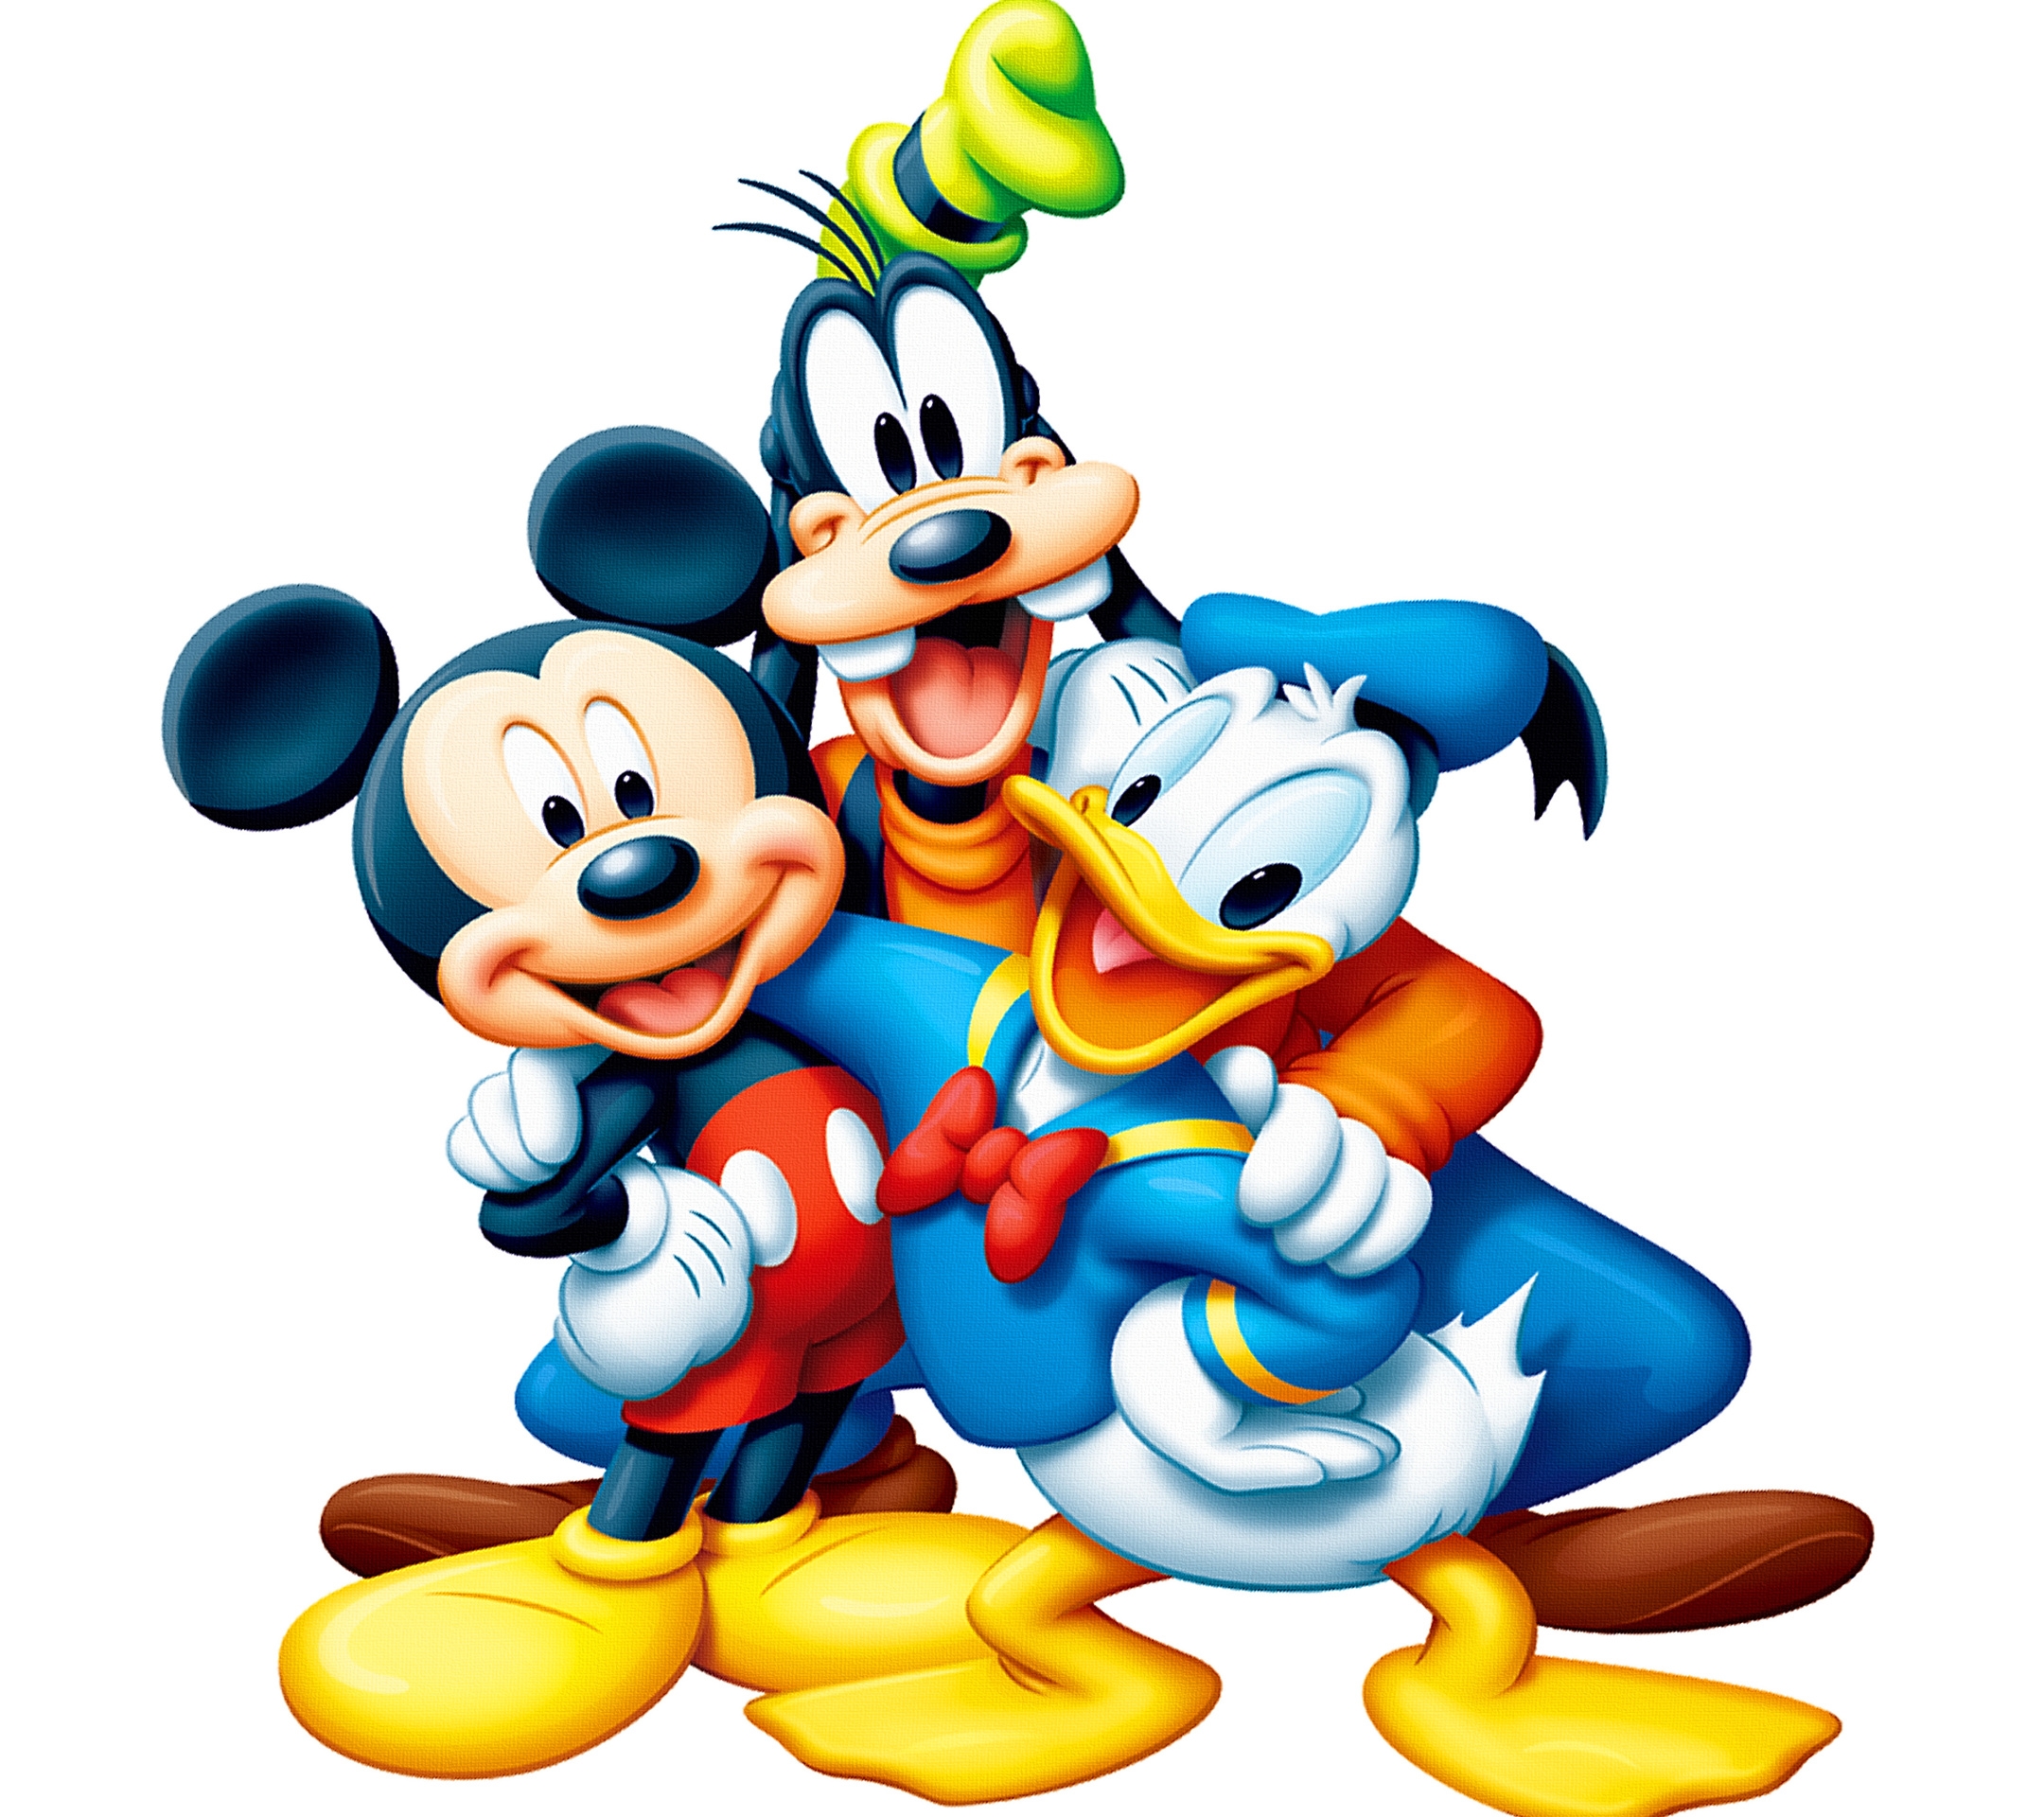 Donald Duck Backgrounds, Compatible - PC, Mobile, Gadgets| 2160x1920 px